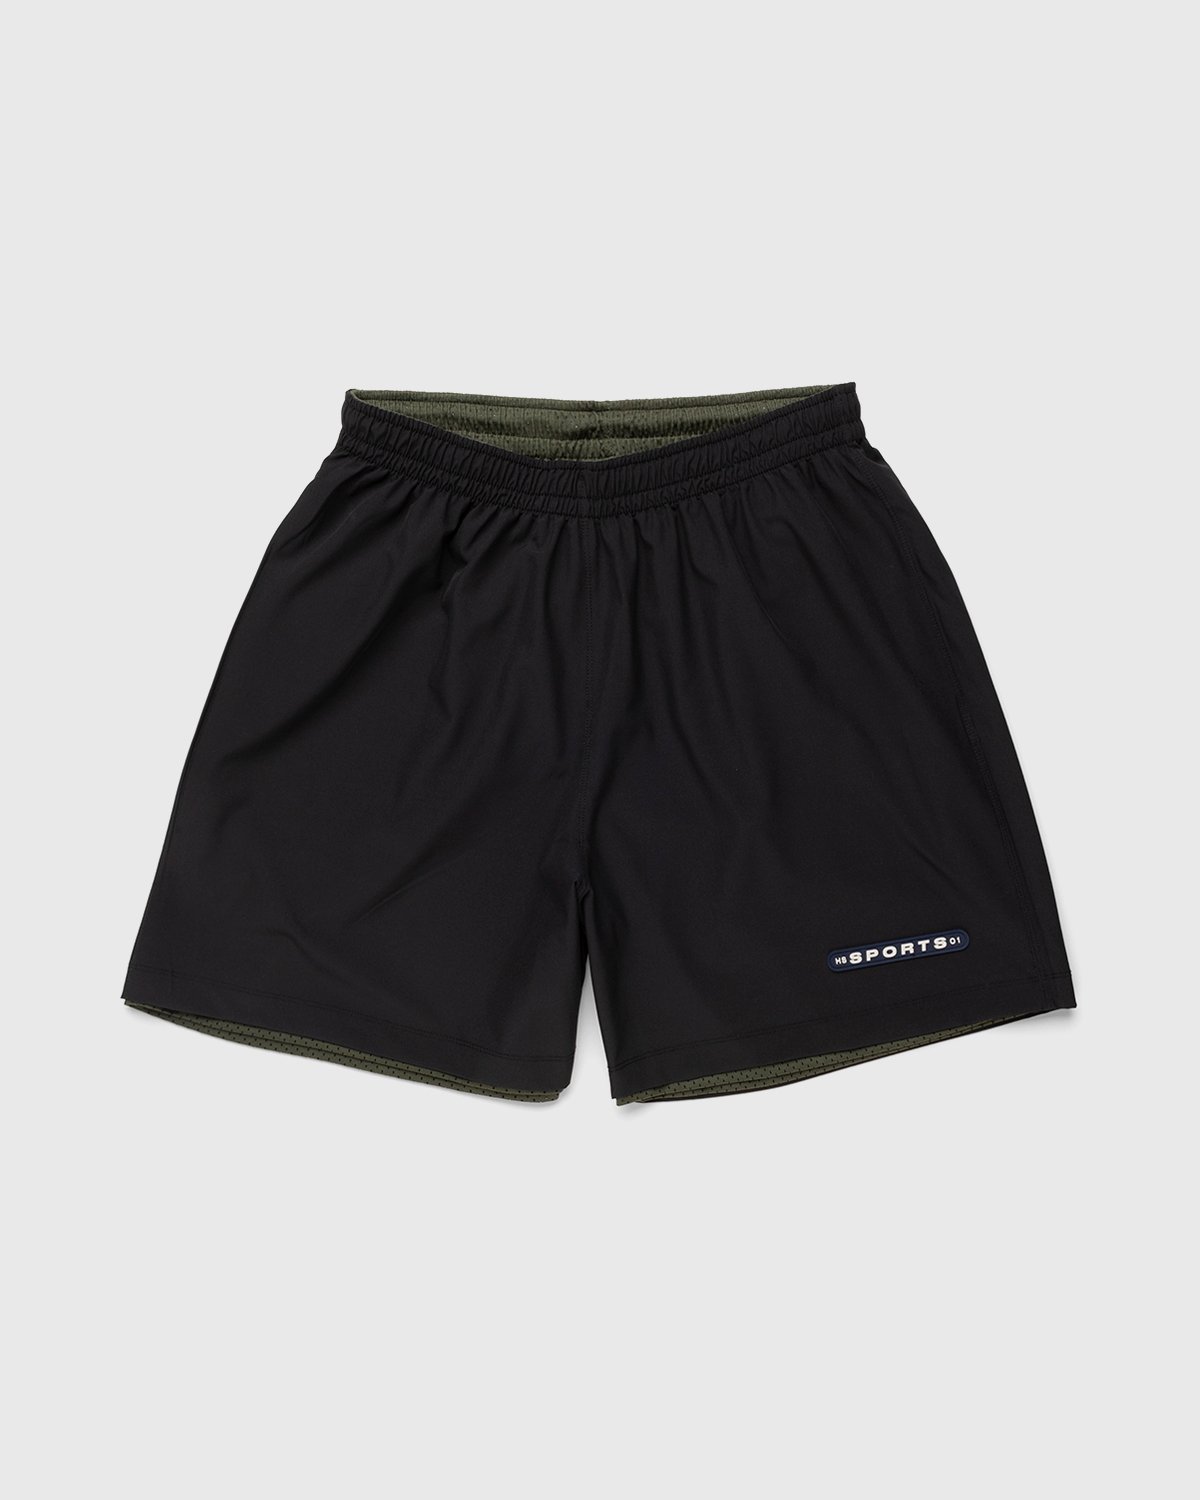 Highsnobiety - HS Sports Reversible Mesh Shorts Black/Khaki - Clothing - Green - Image 3